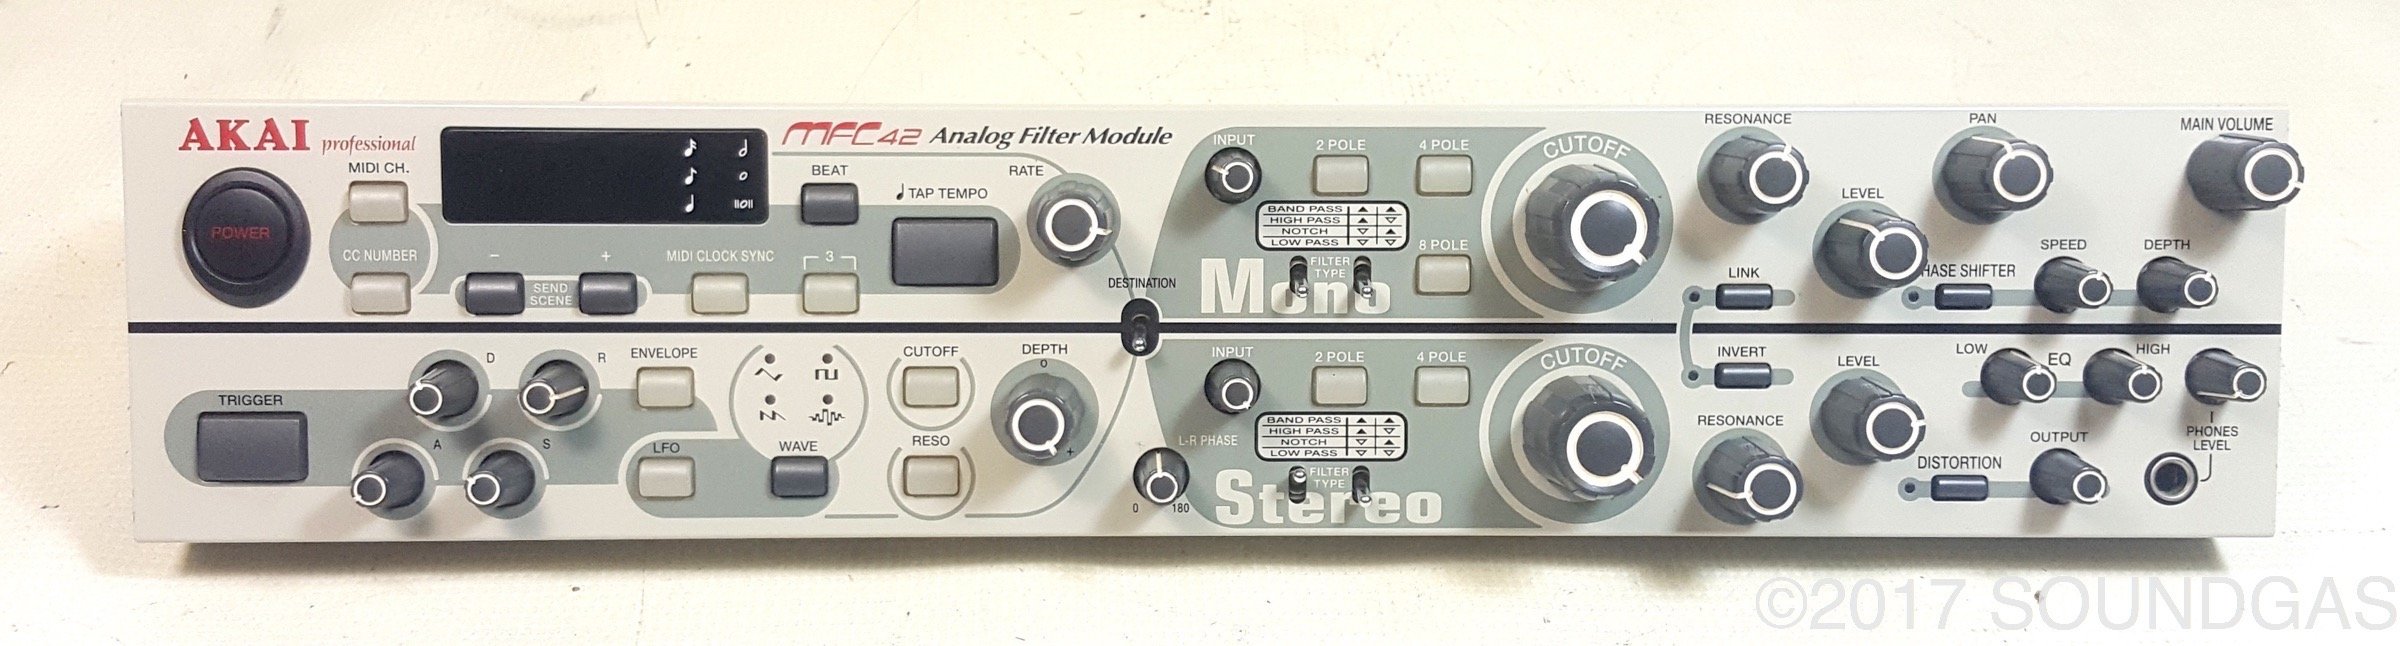 Akai MFC42 Analog Filter Module